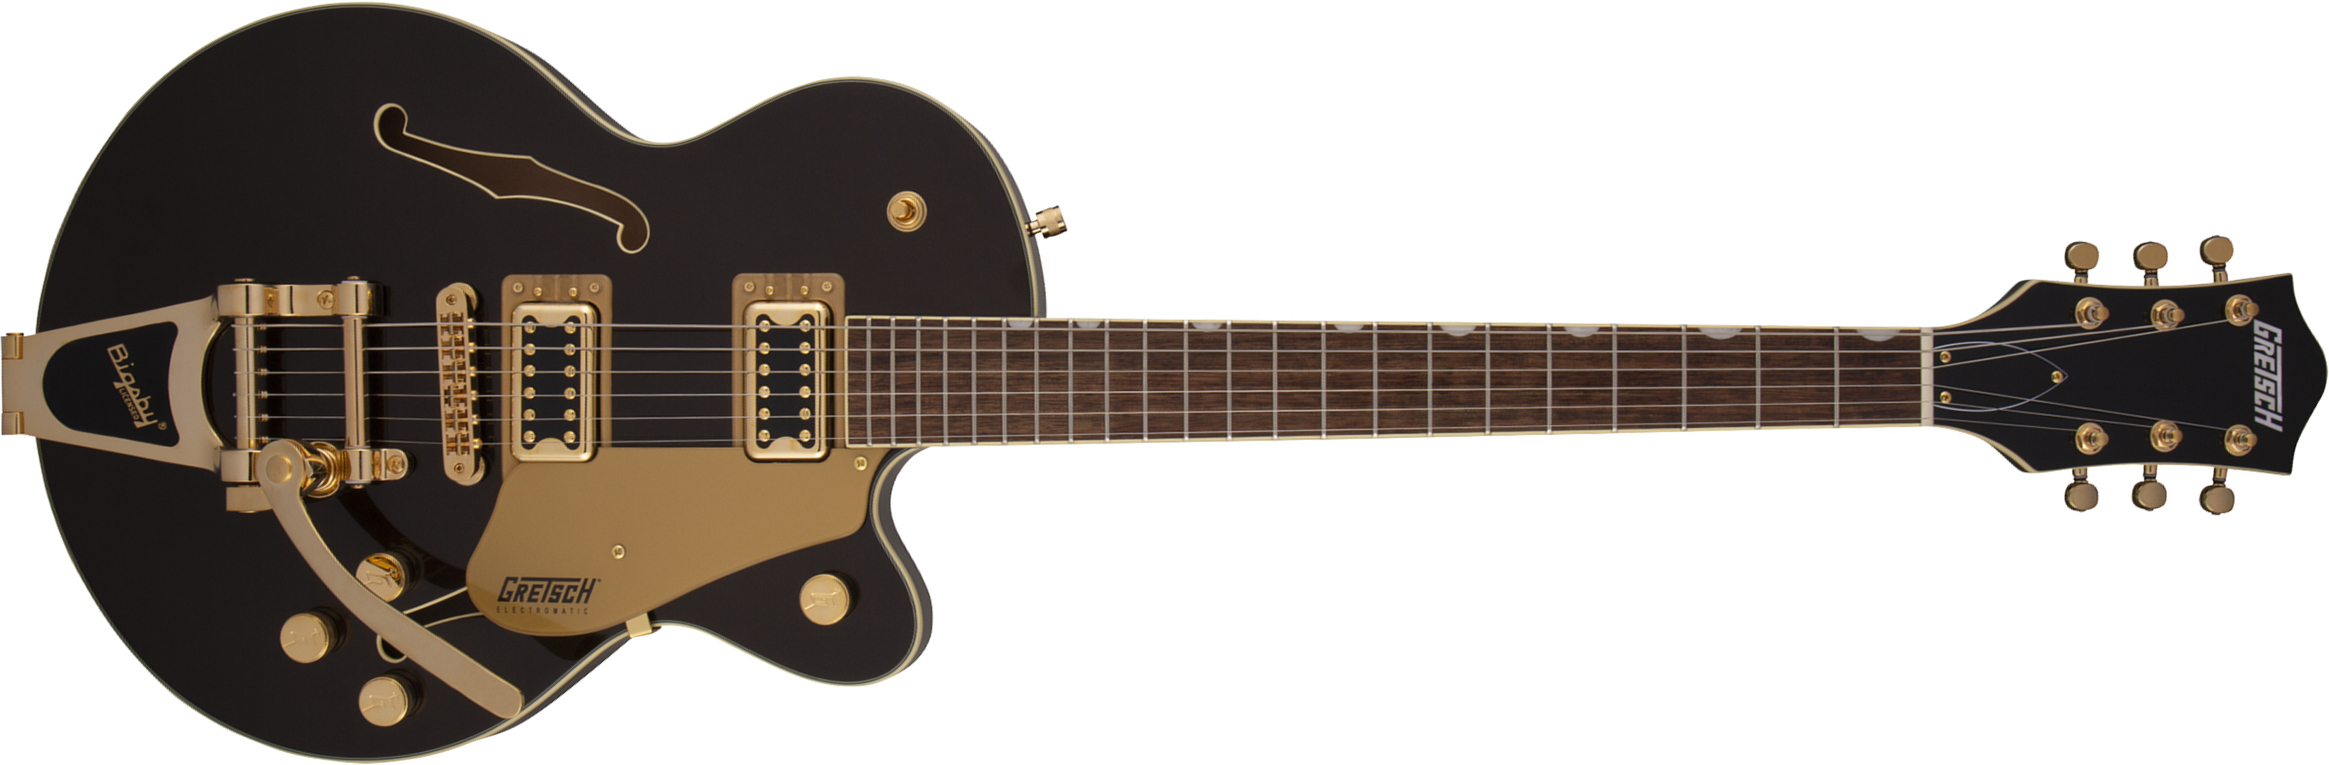 Gretsch G5655tg Electromatic Center Block Jr. Bigsby 2h Trem Lau - Black Gold - Semi hollow elektriche gitaar - Main picture